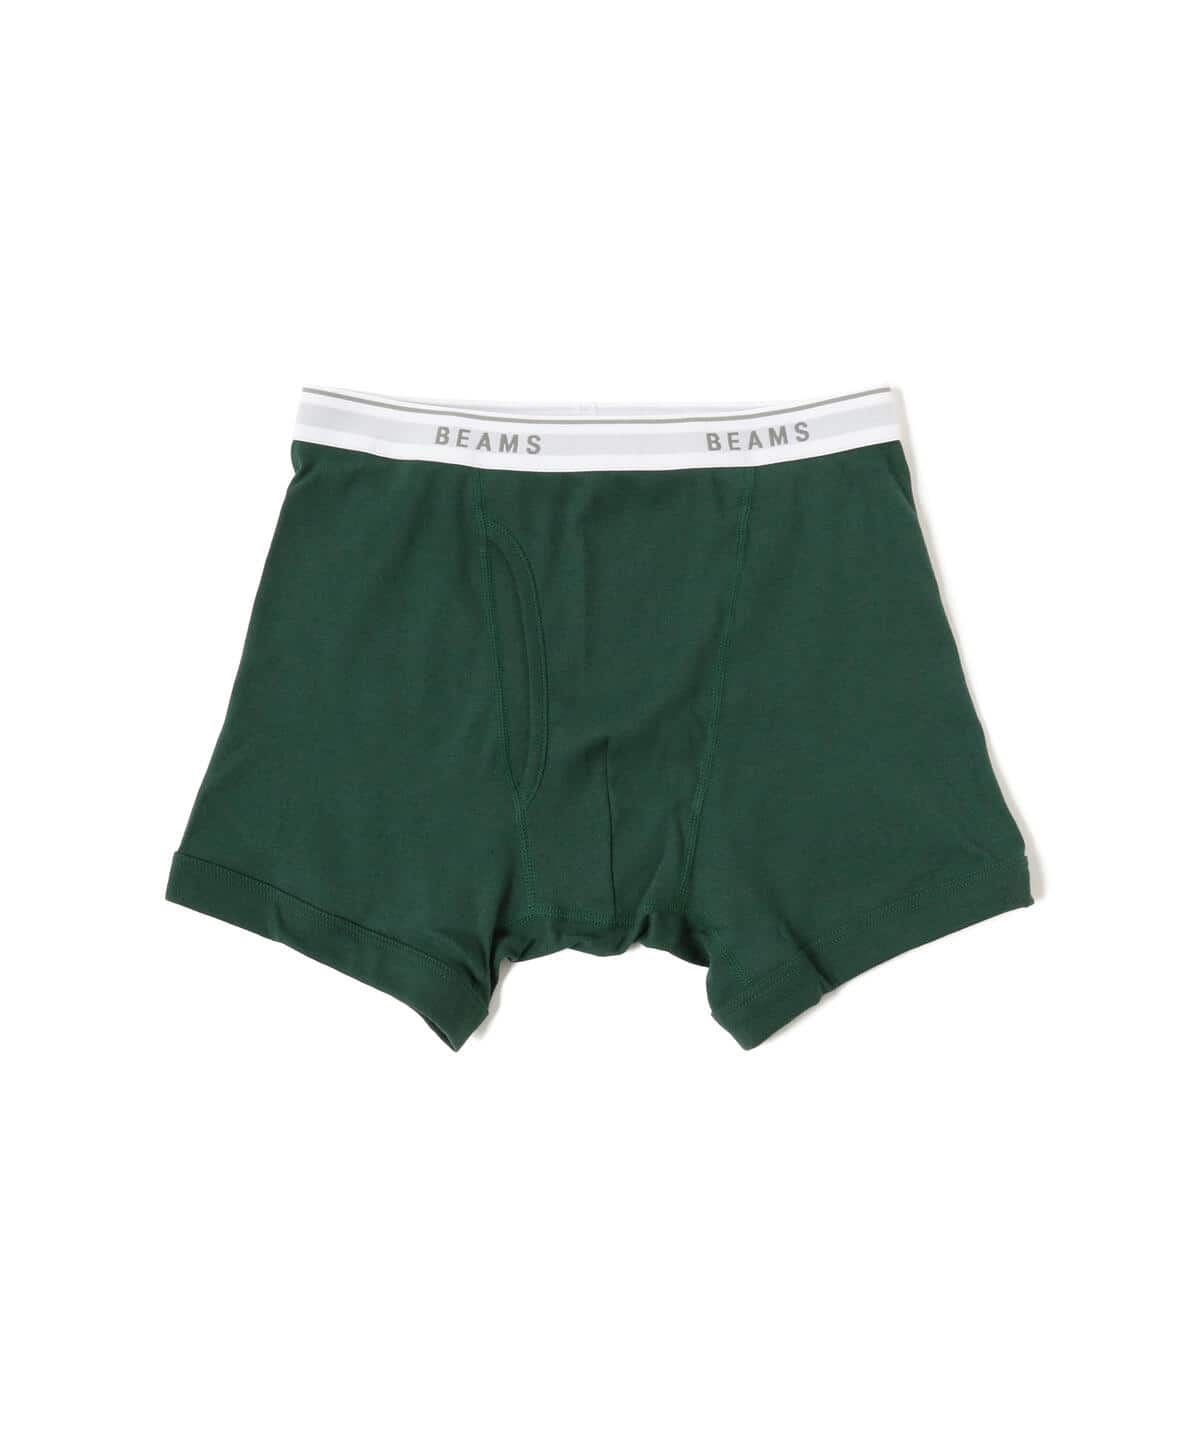 BEAMS BEAMS / Basic boxer shorts (underwear/ BEAMS underwear) mail 